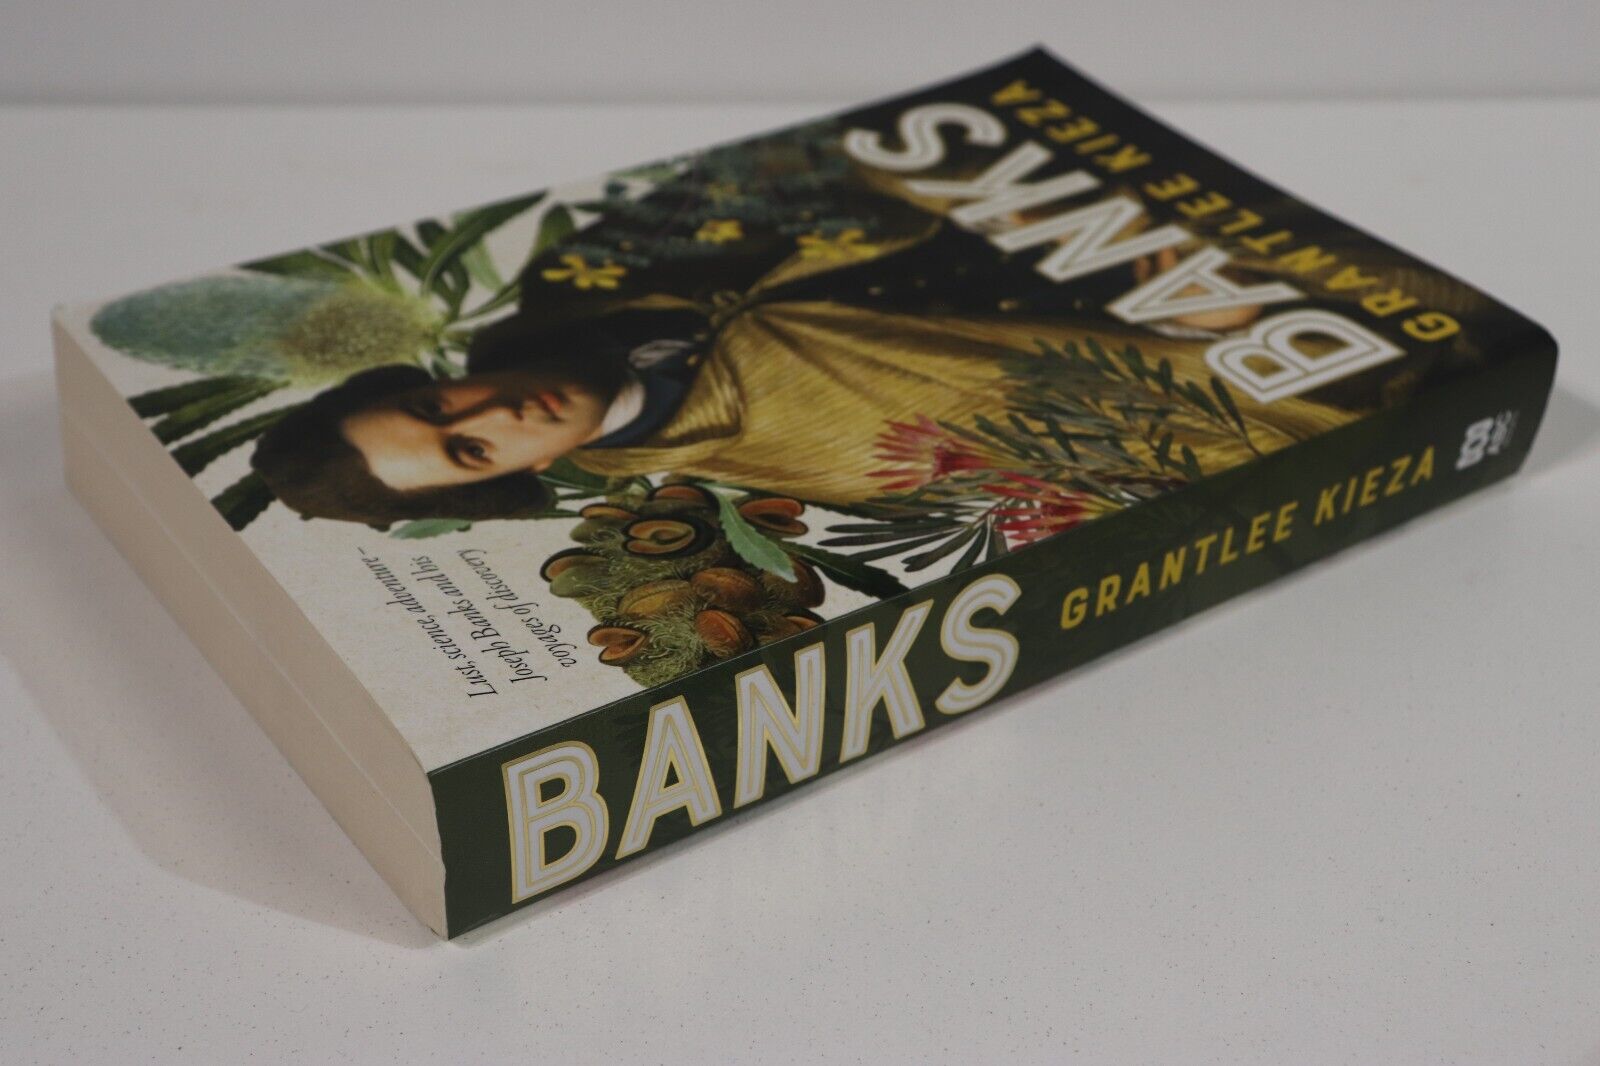 Banks: Joseph Banks by Grantlee Kieza - 2021 - Australian History Book - 0